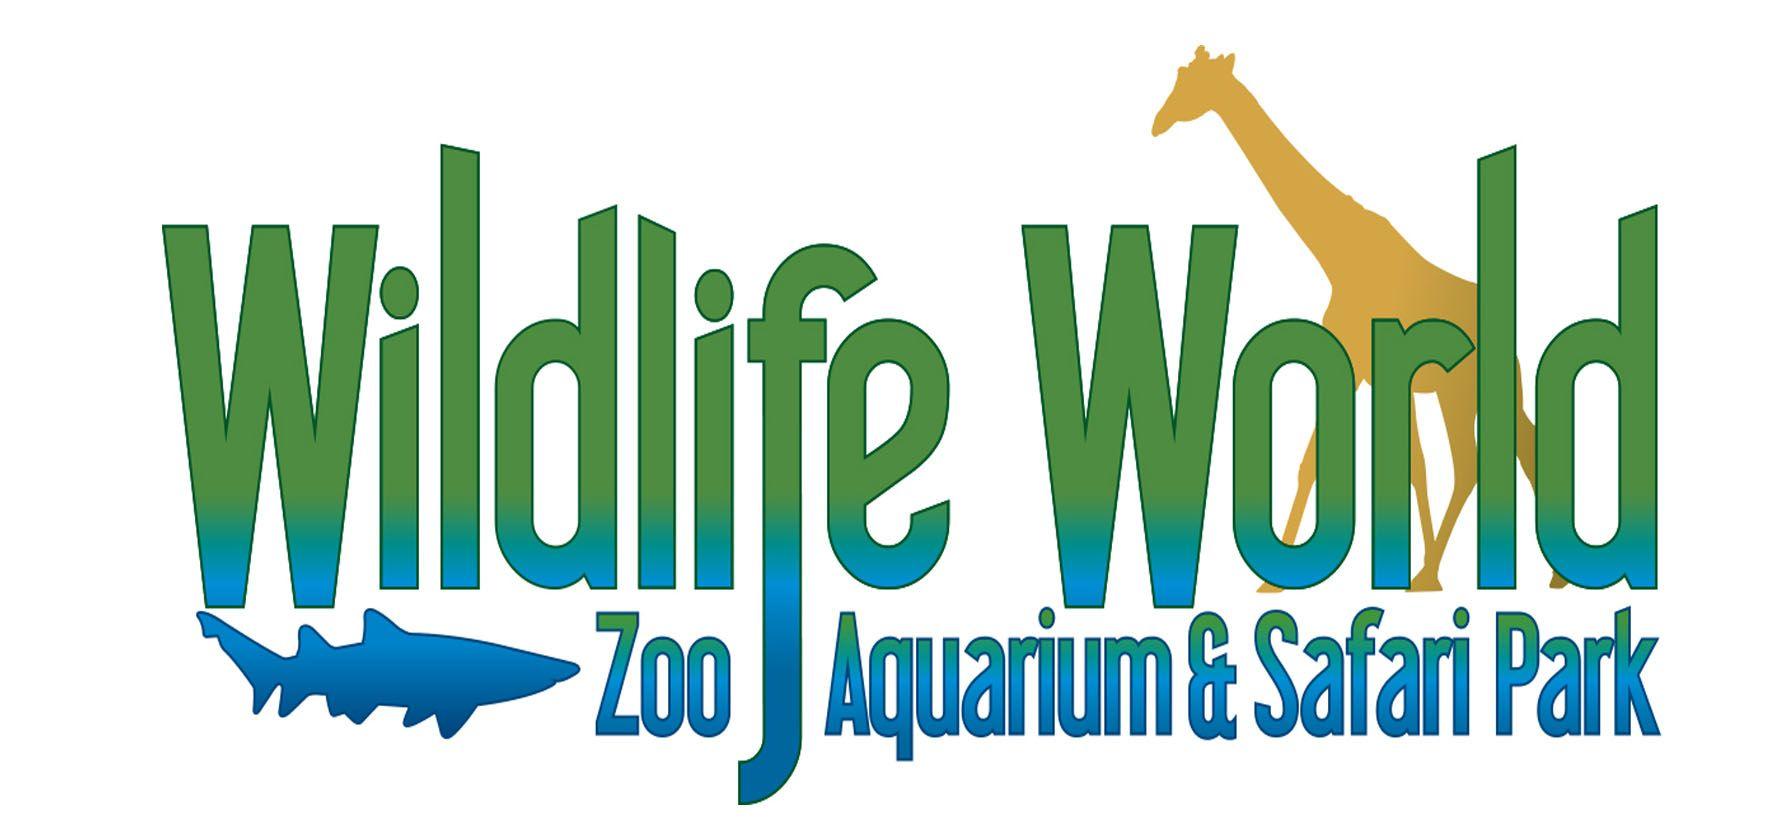 Safari Zoo Logo - Home - Wildlife World